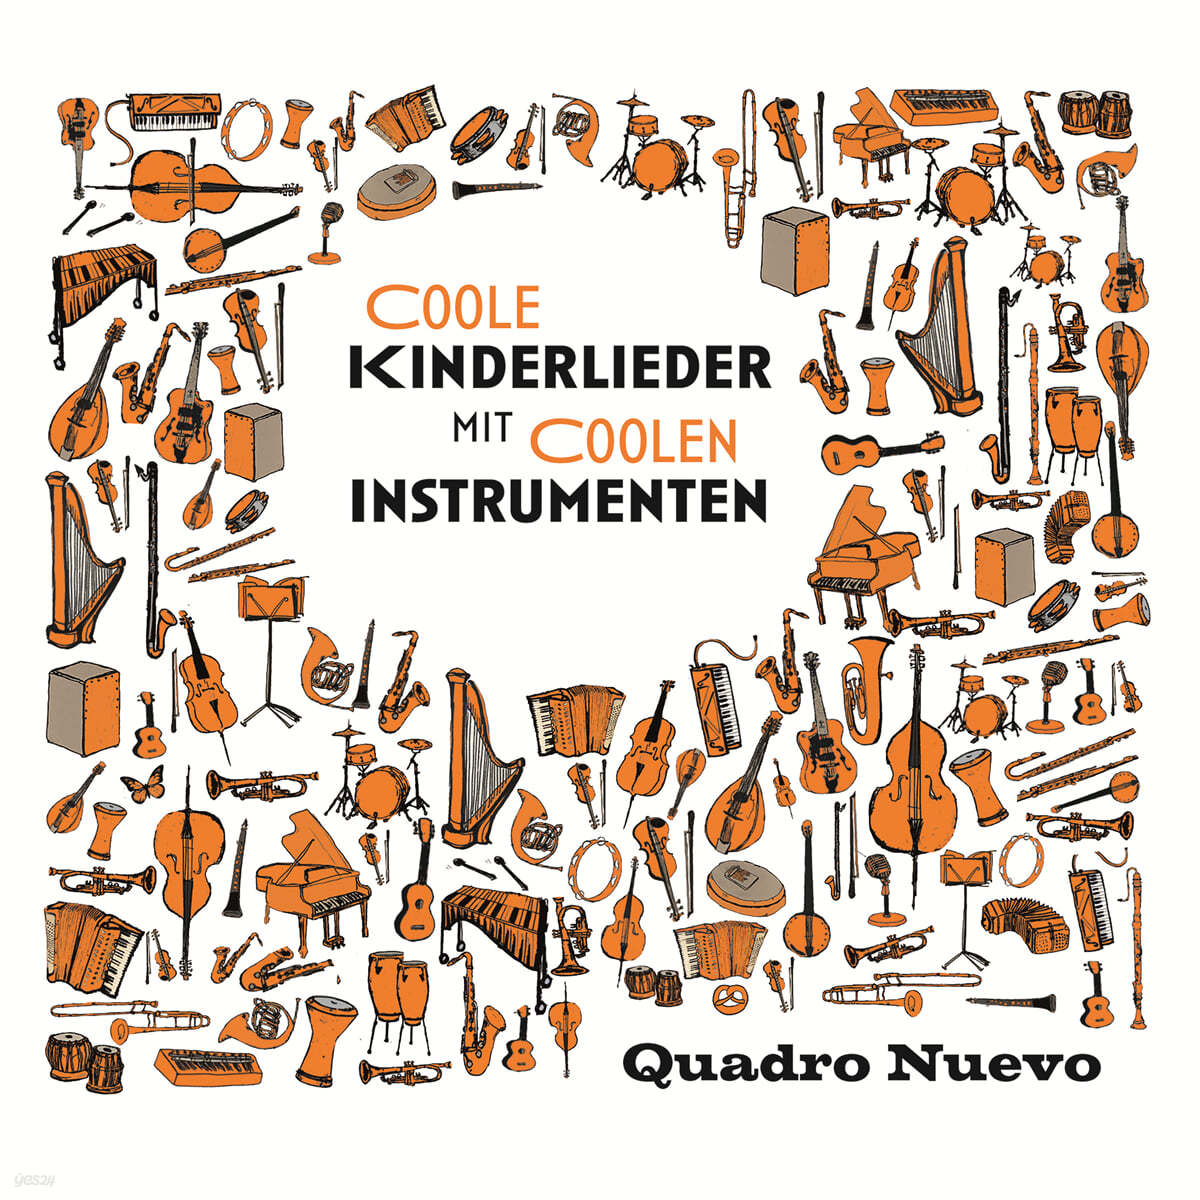 Quadro Nuevo (콰드로 누에보) - 세계 어린이 동요집 Coole Kinderlieder Mit Coolen Instrumenten